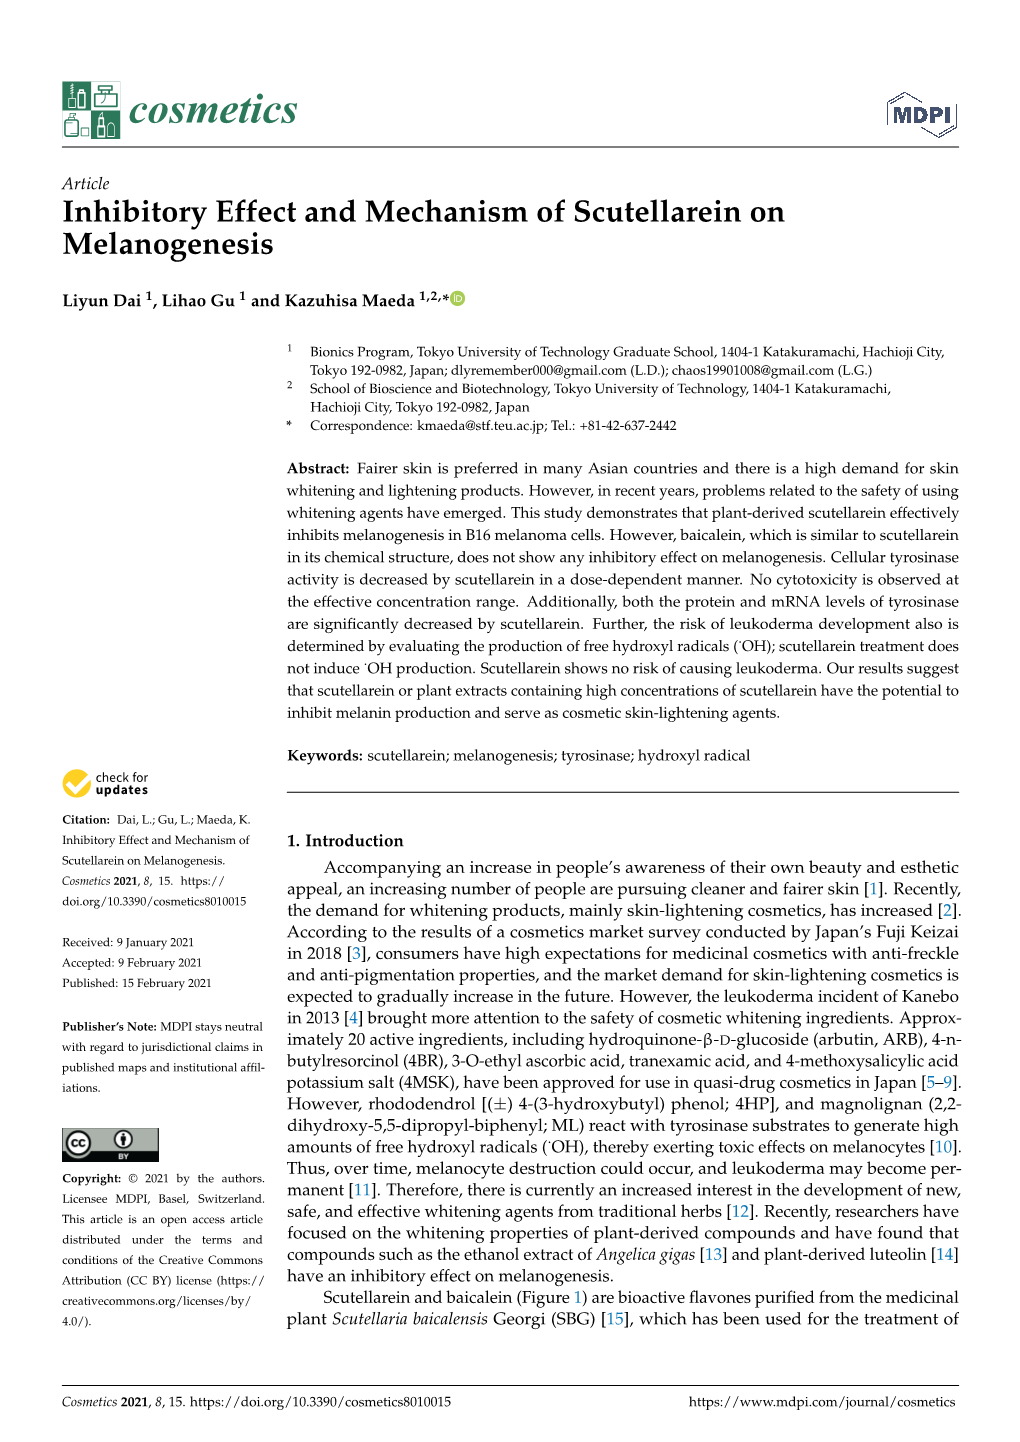 Inhibitory Effect and Mechanism of Scutellarein on Melanogenesis